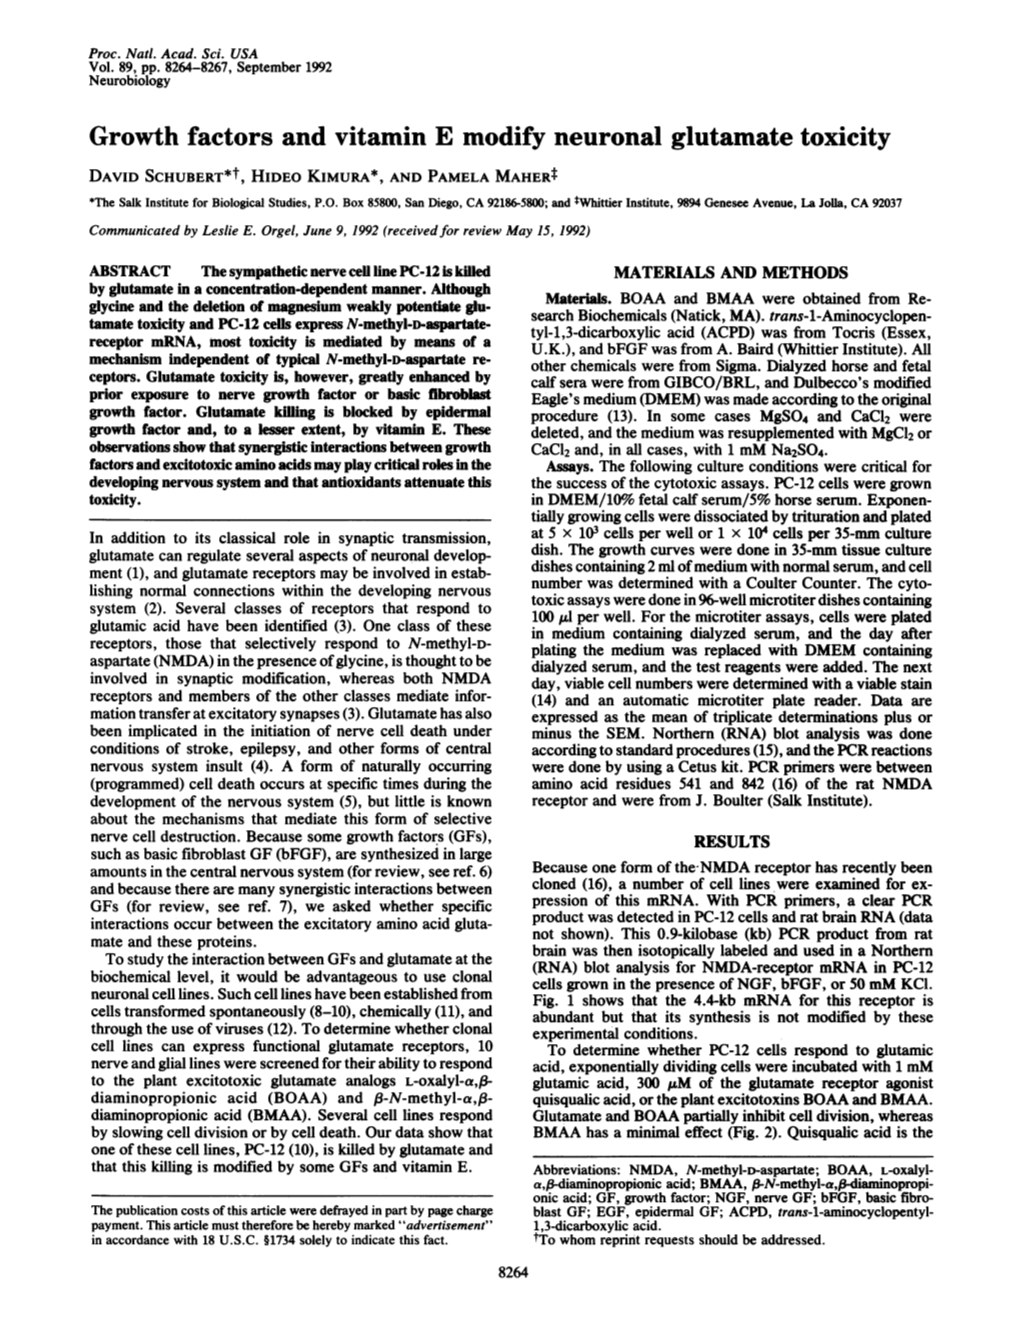 Growth Factors and Vitamin E Modify Neuronal Glutamate Toxicity DAVID SCHUBERT*T, Hideo Kimura*, and PAMELA MAHER* *The Salk Institute for Biological Studies, P.O